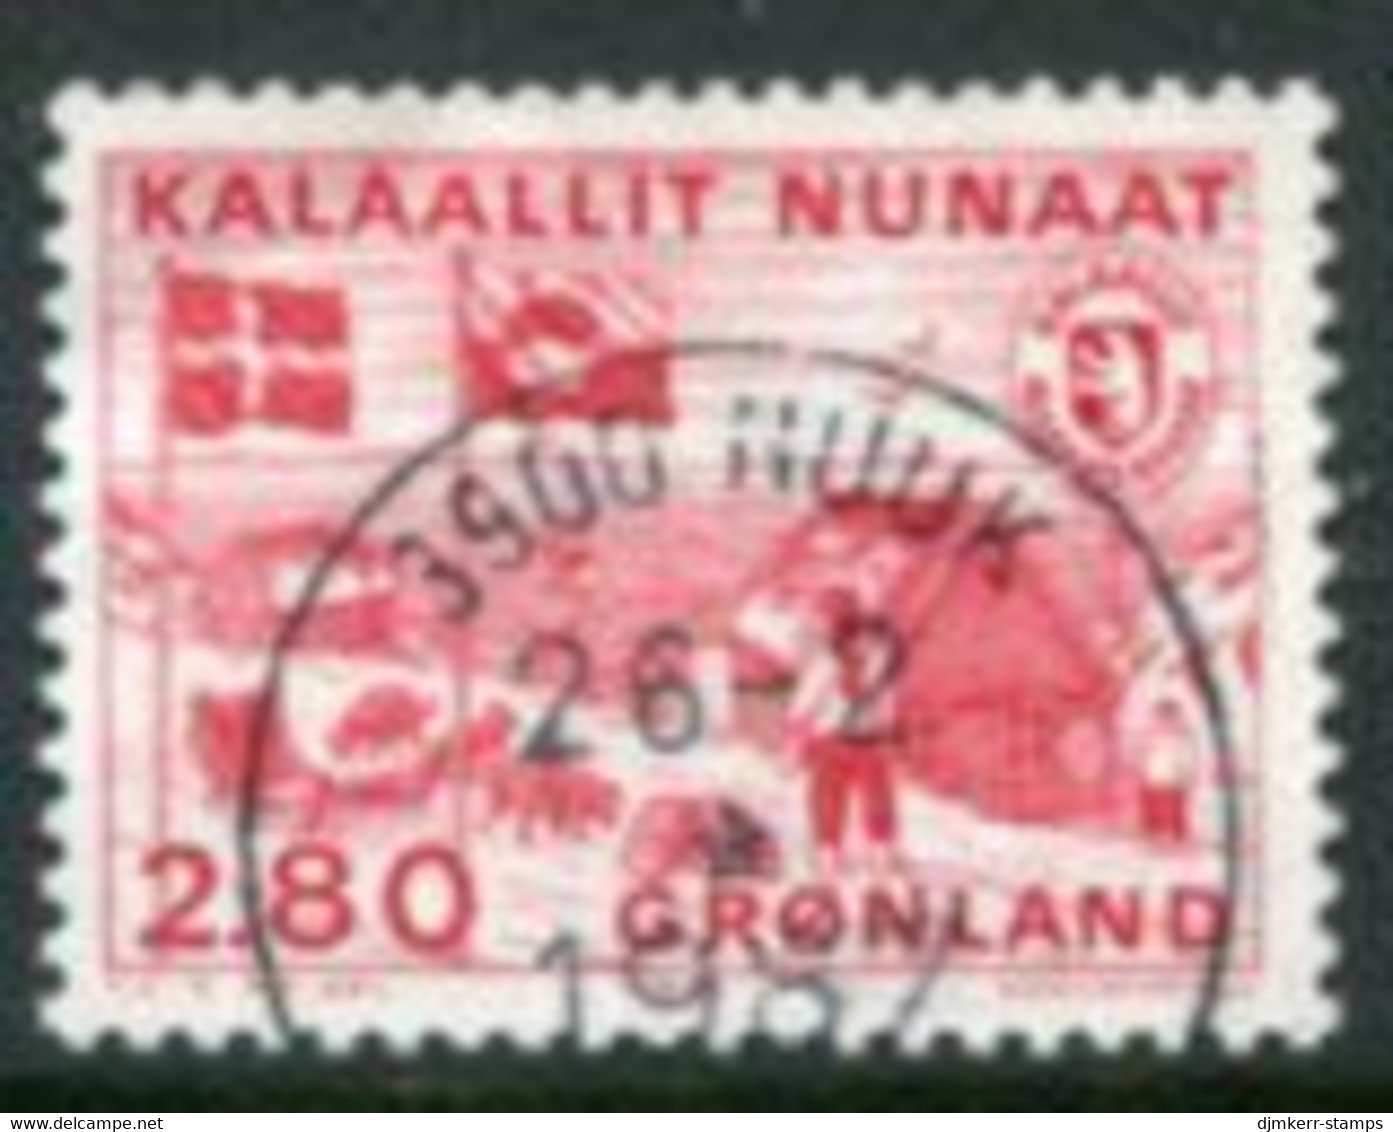 GREENLAND 1986 Postal Autonomy Used. Michel 163 - Gebraucht